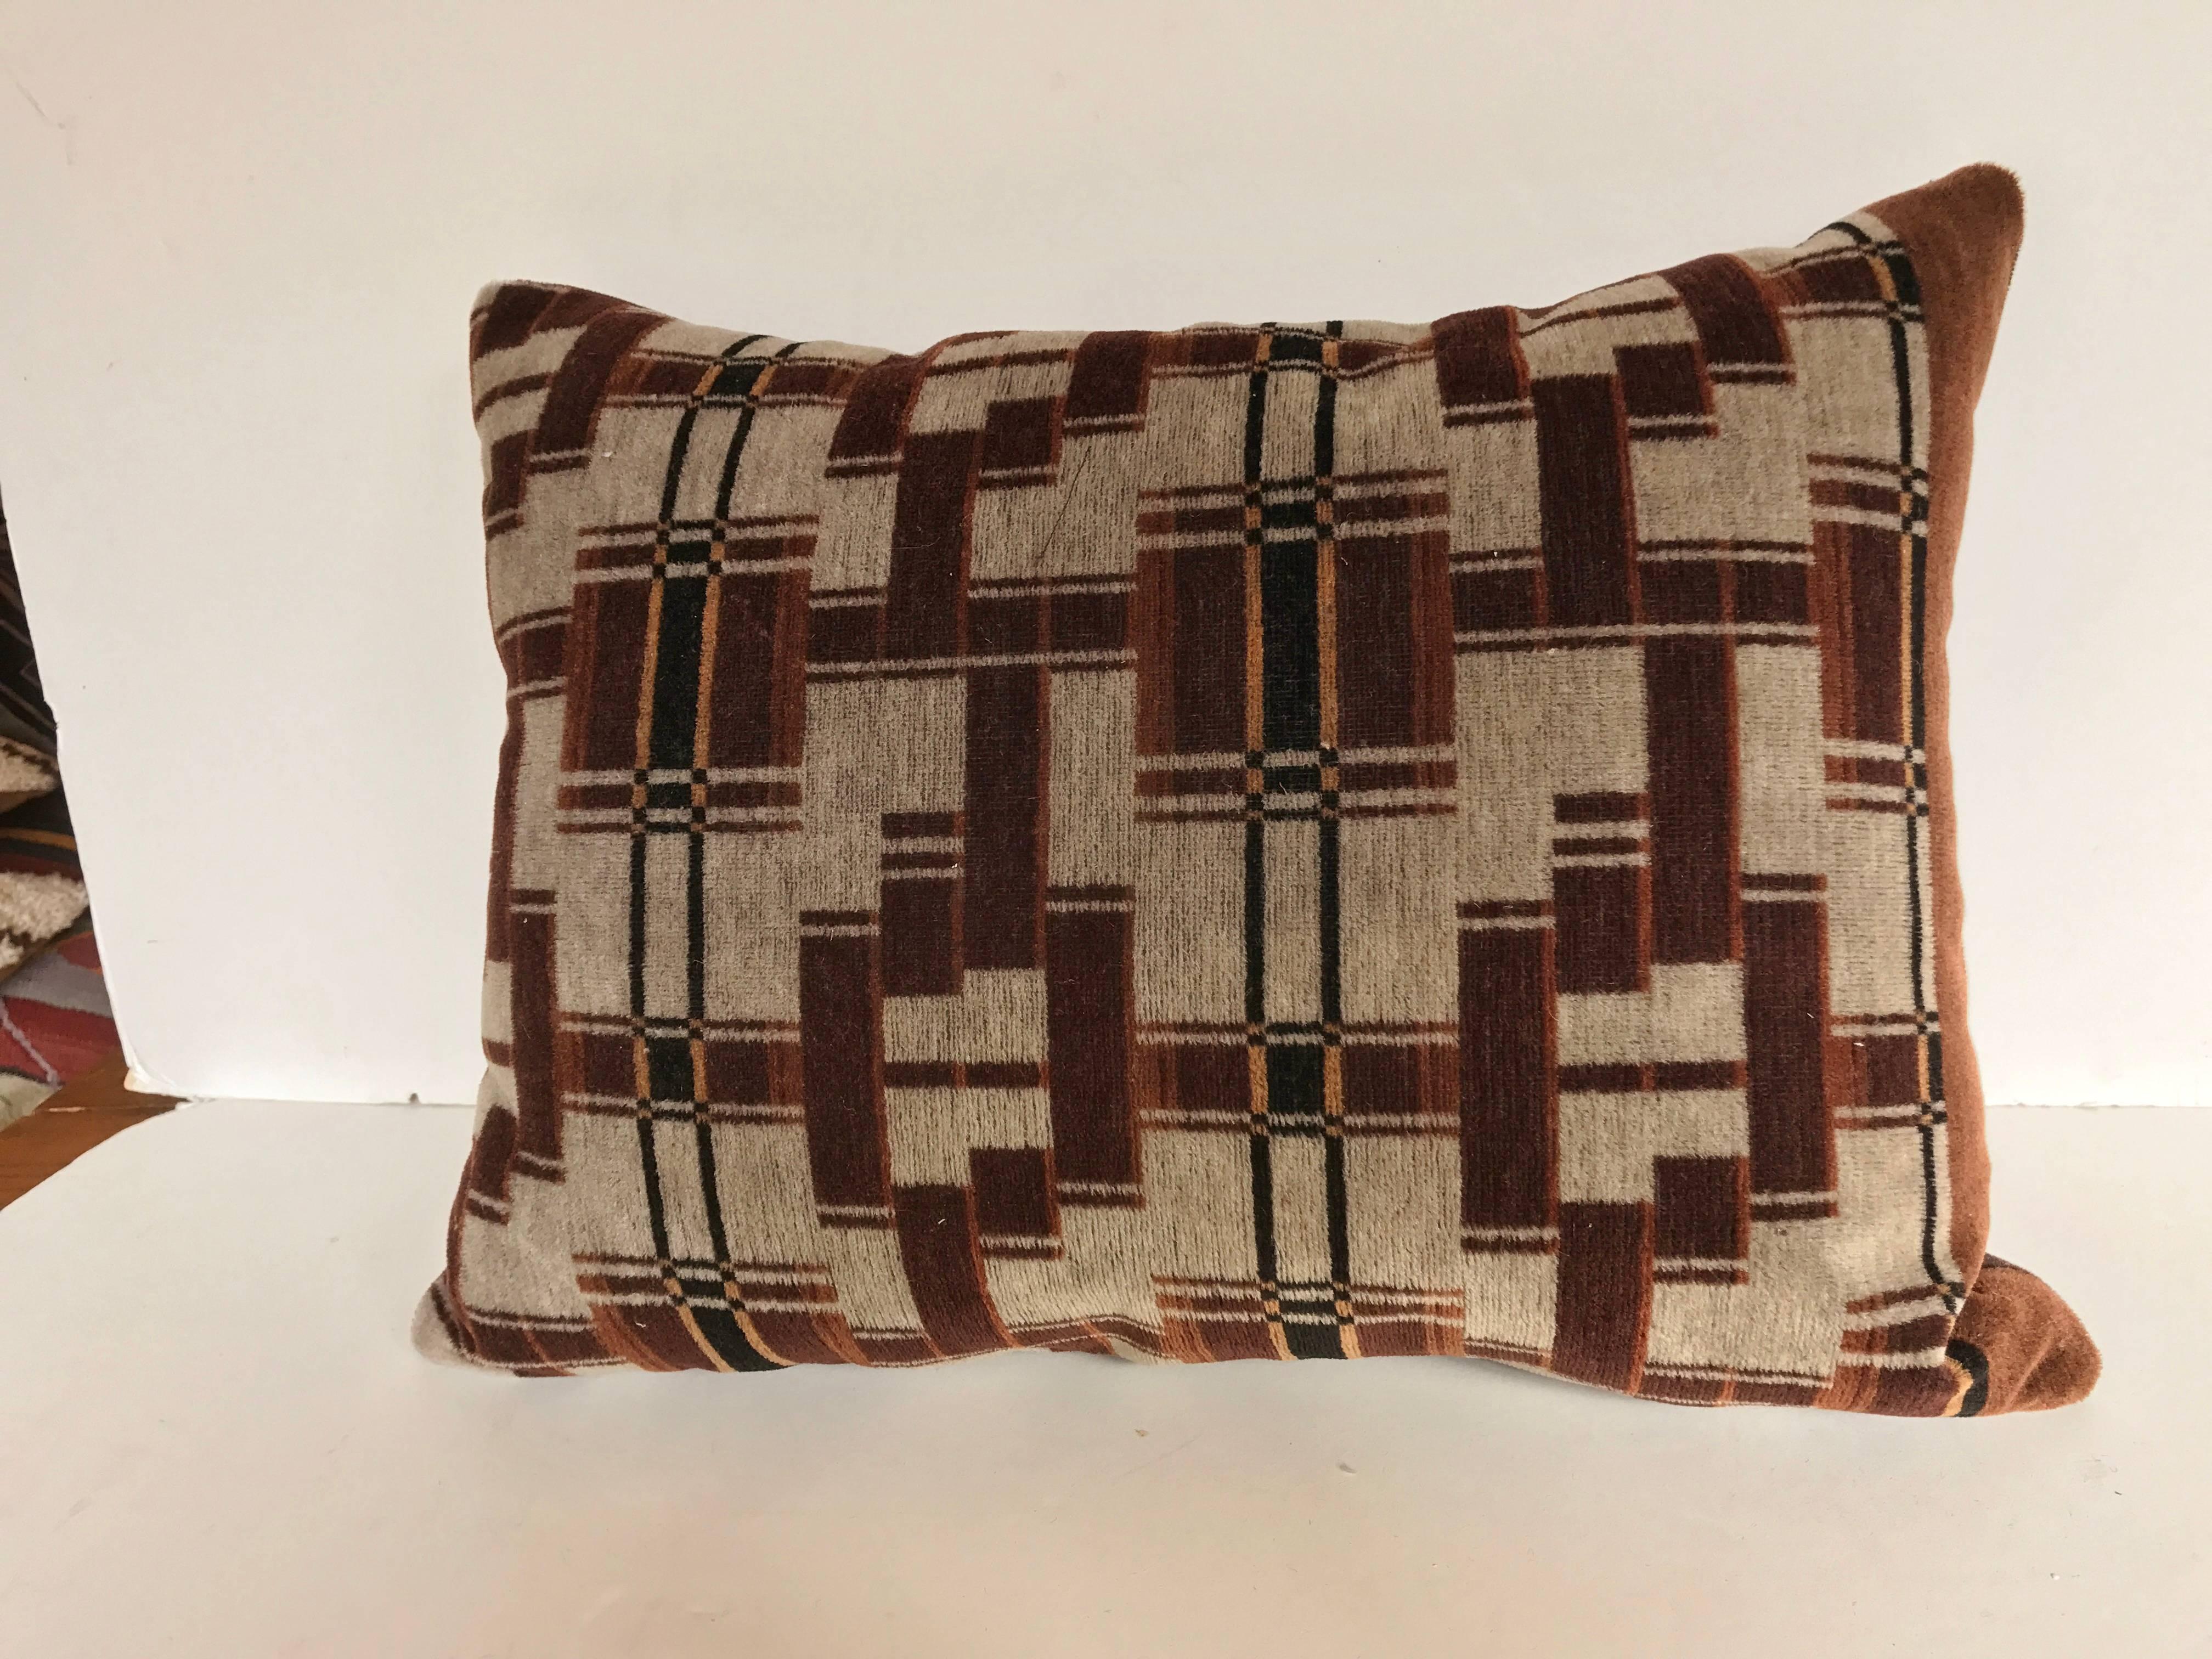 Dutch Custom Pillow Cut from a Rare Hand-Blocked Mohair, Amsterdam School Textile